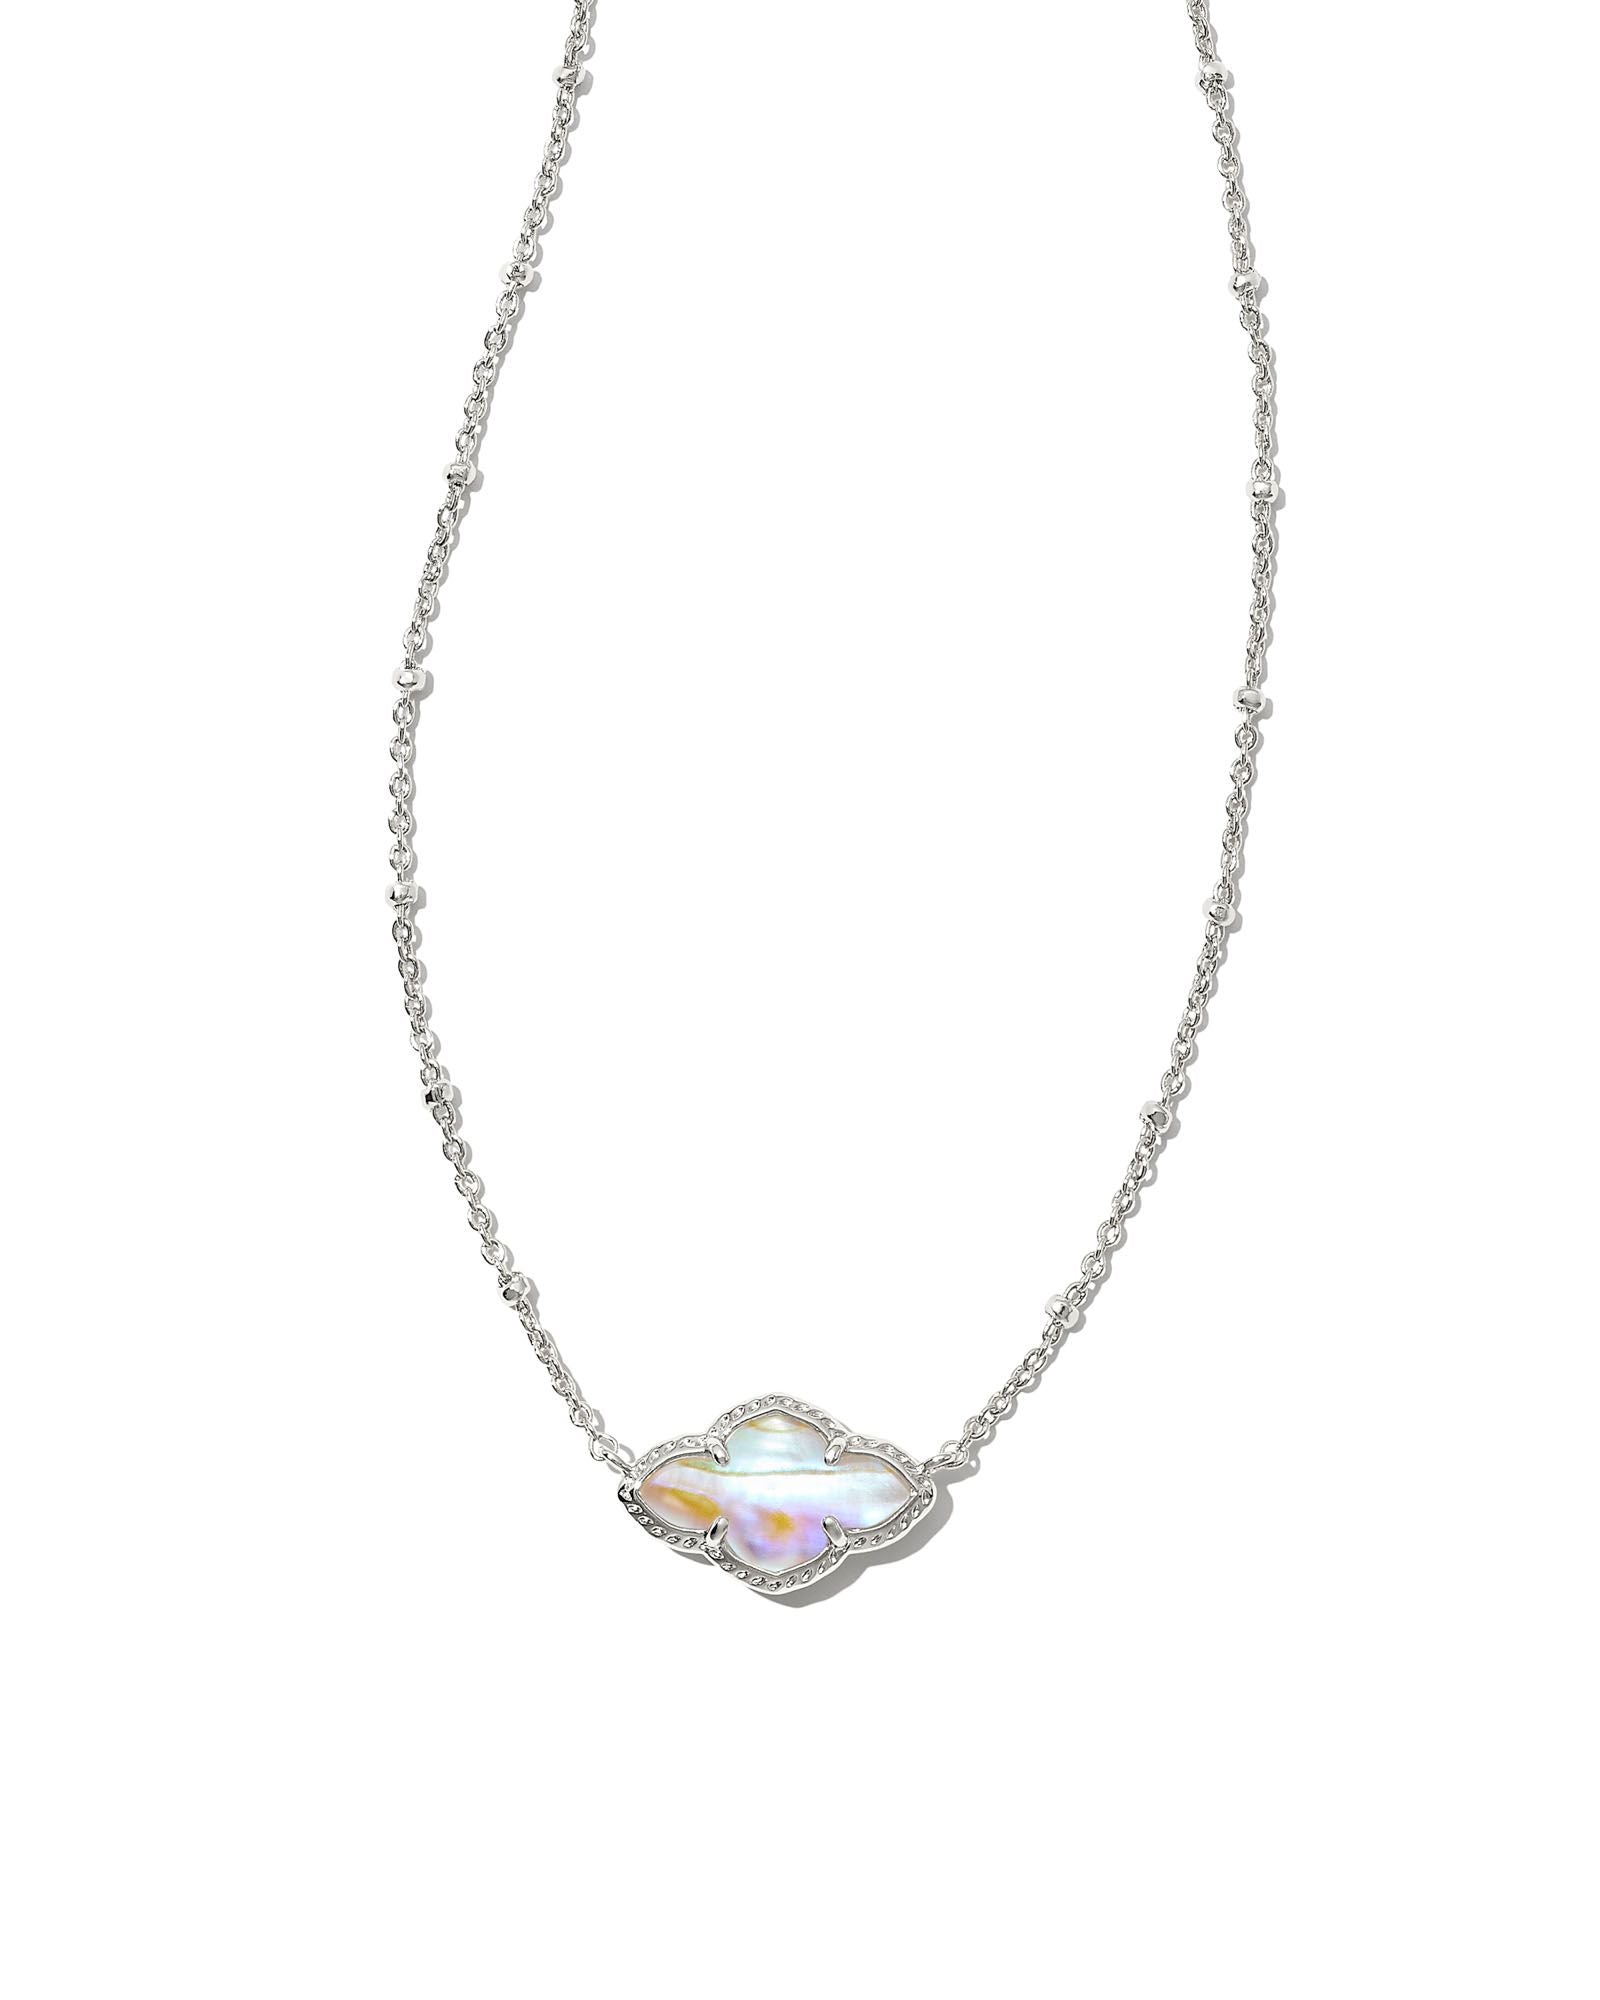 Sale Abbie Pendant Necklace Silver Iridescent Abalone